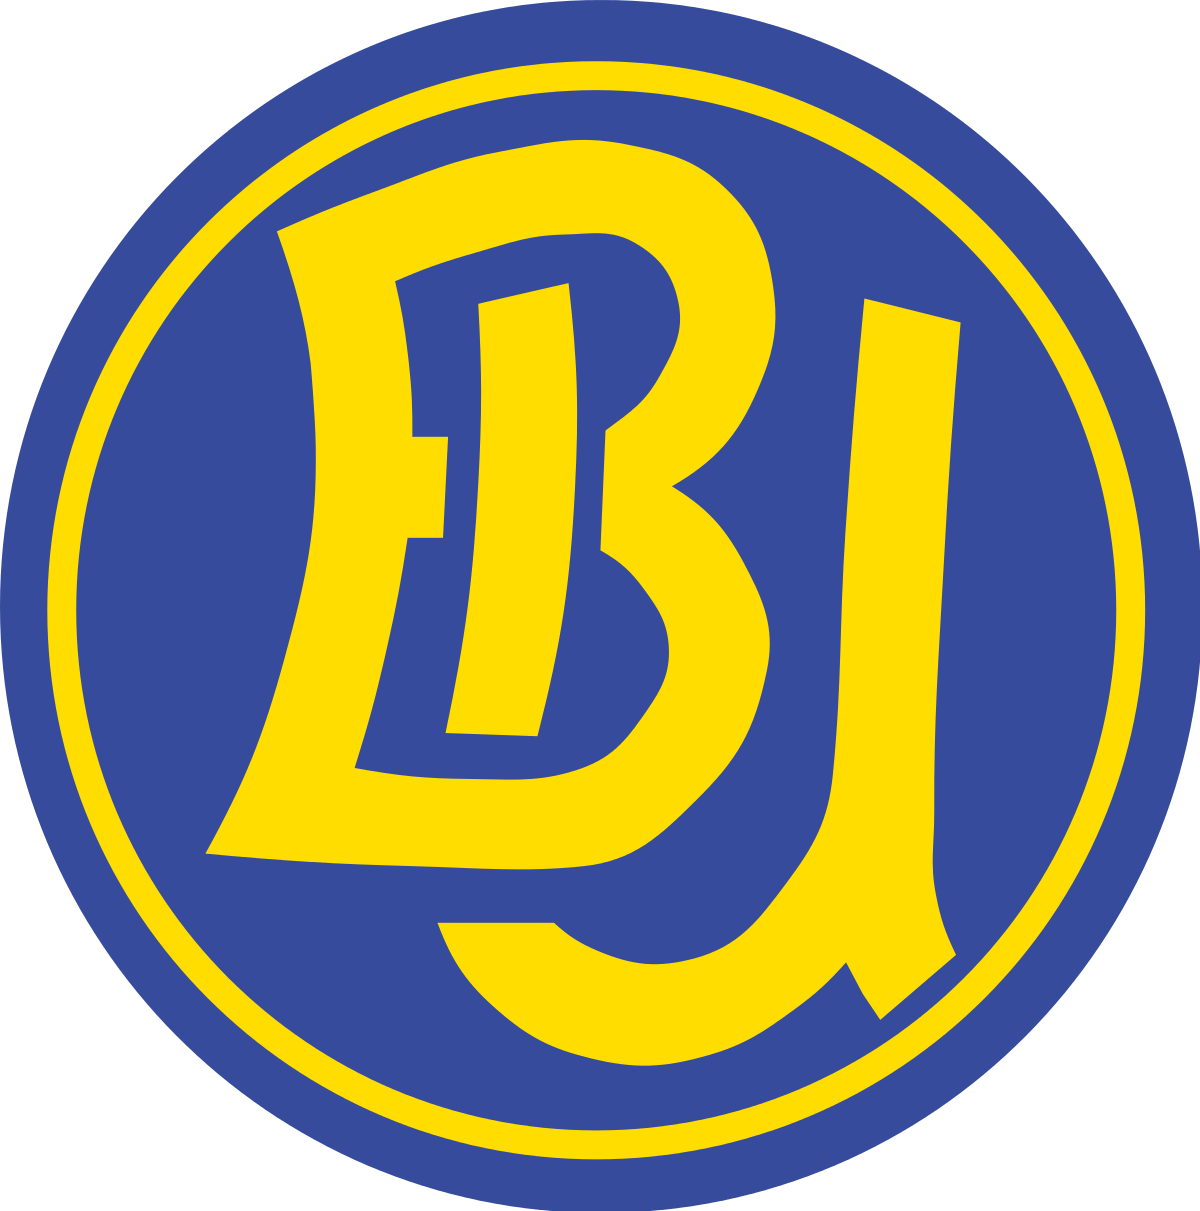 HSV Barmbek Uhlenhorst